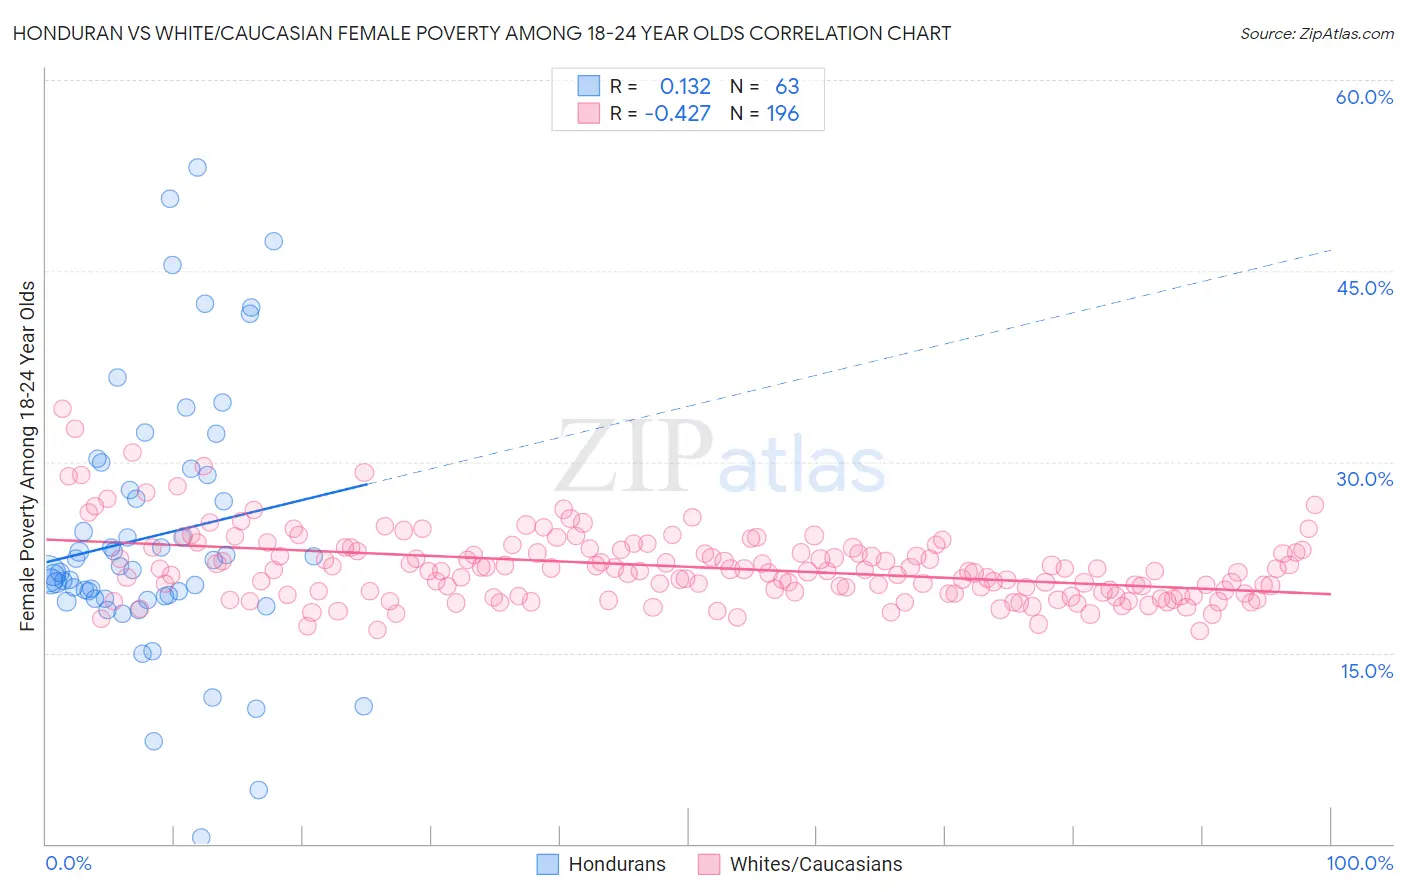 Honduran vs White/Caucasian Female Poverty Among 18-24 Year Olds